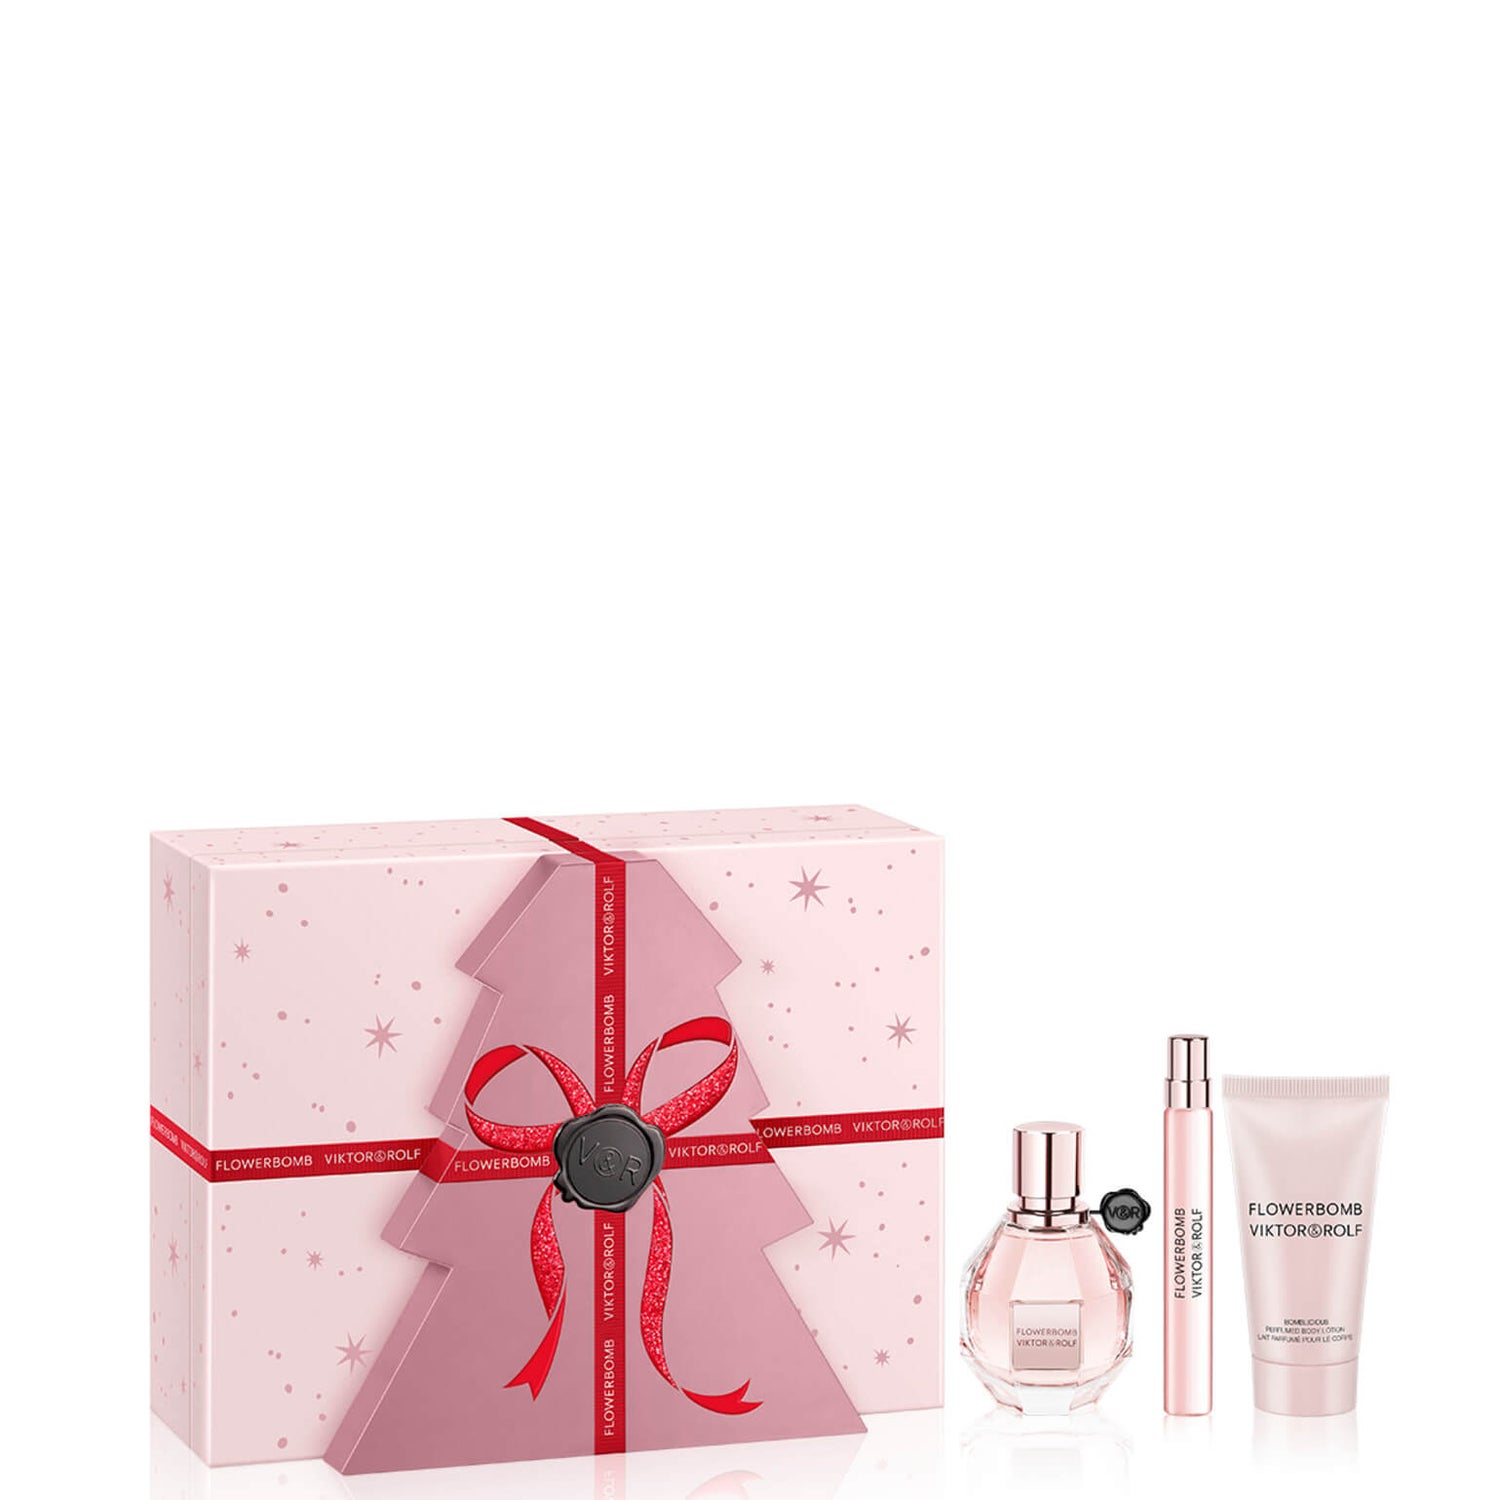 Viktor og Rolf Flowerbomb Eau de Parfum Luxury Gift Set 50ml (værdi £115.00)